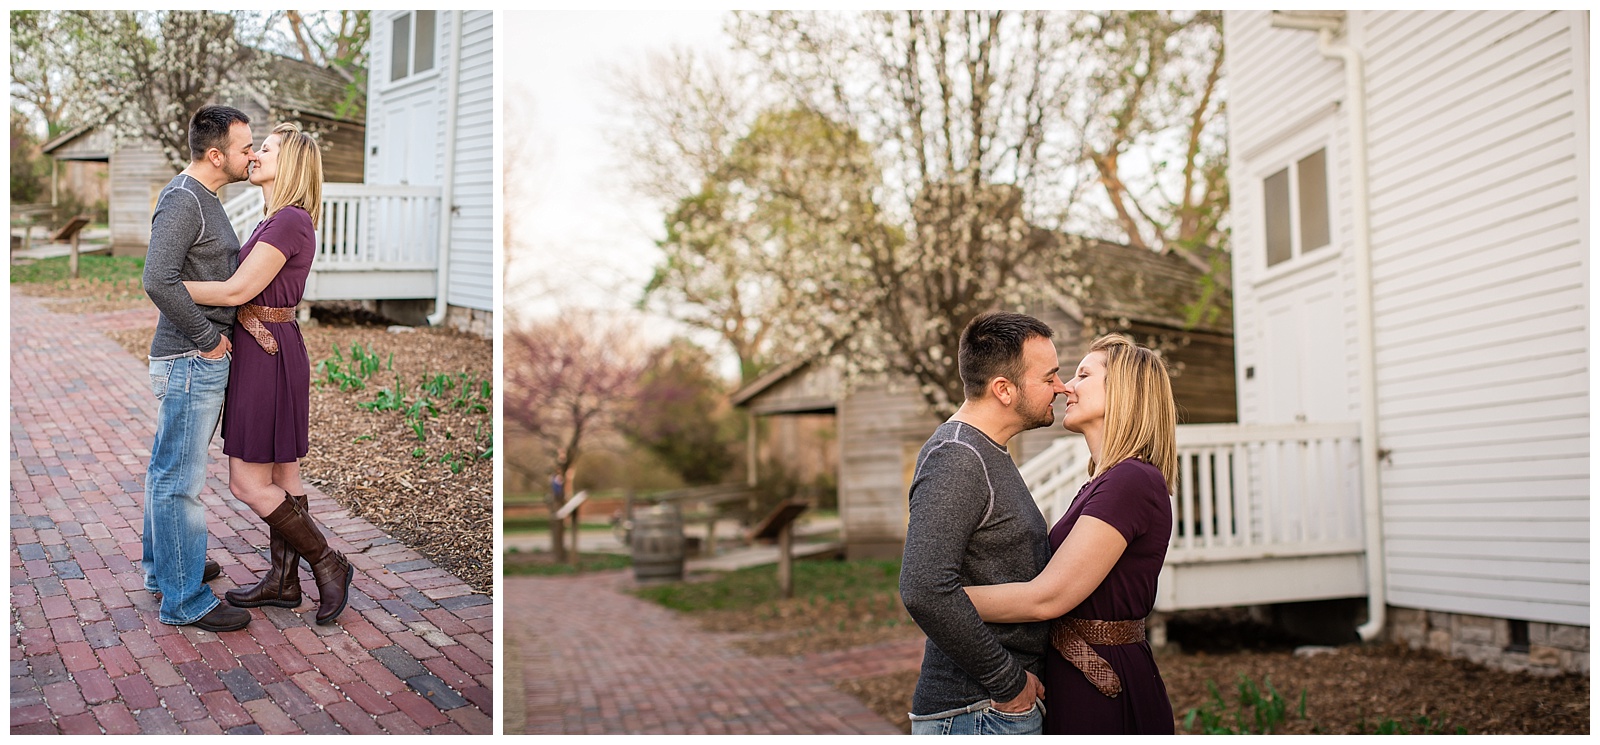 Engagement photography in Topeka, Kansas.